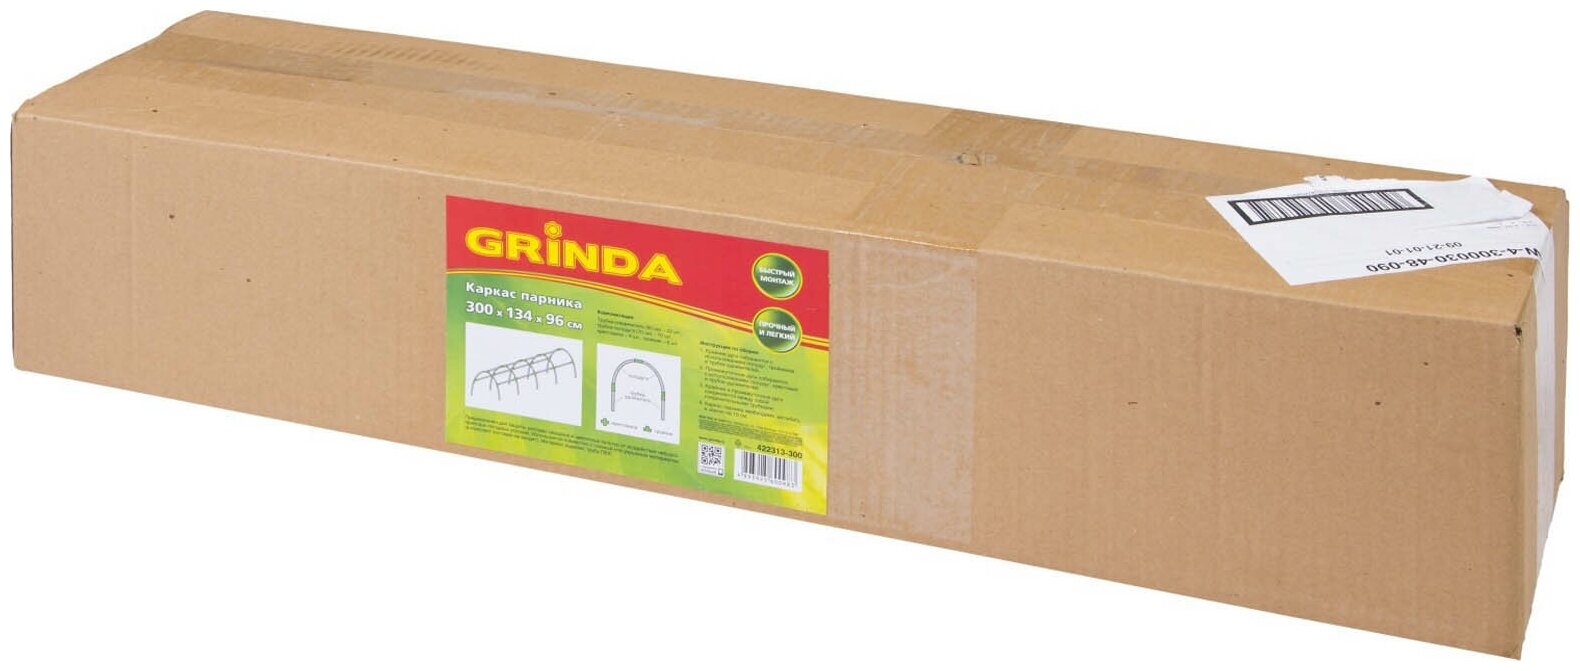 GRINDA 300 х 134 х 96 см, пластиковый, каркас парника (422313-300)